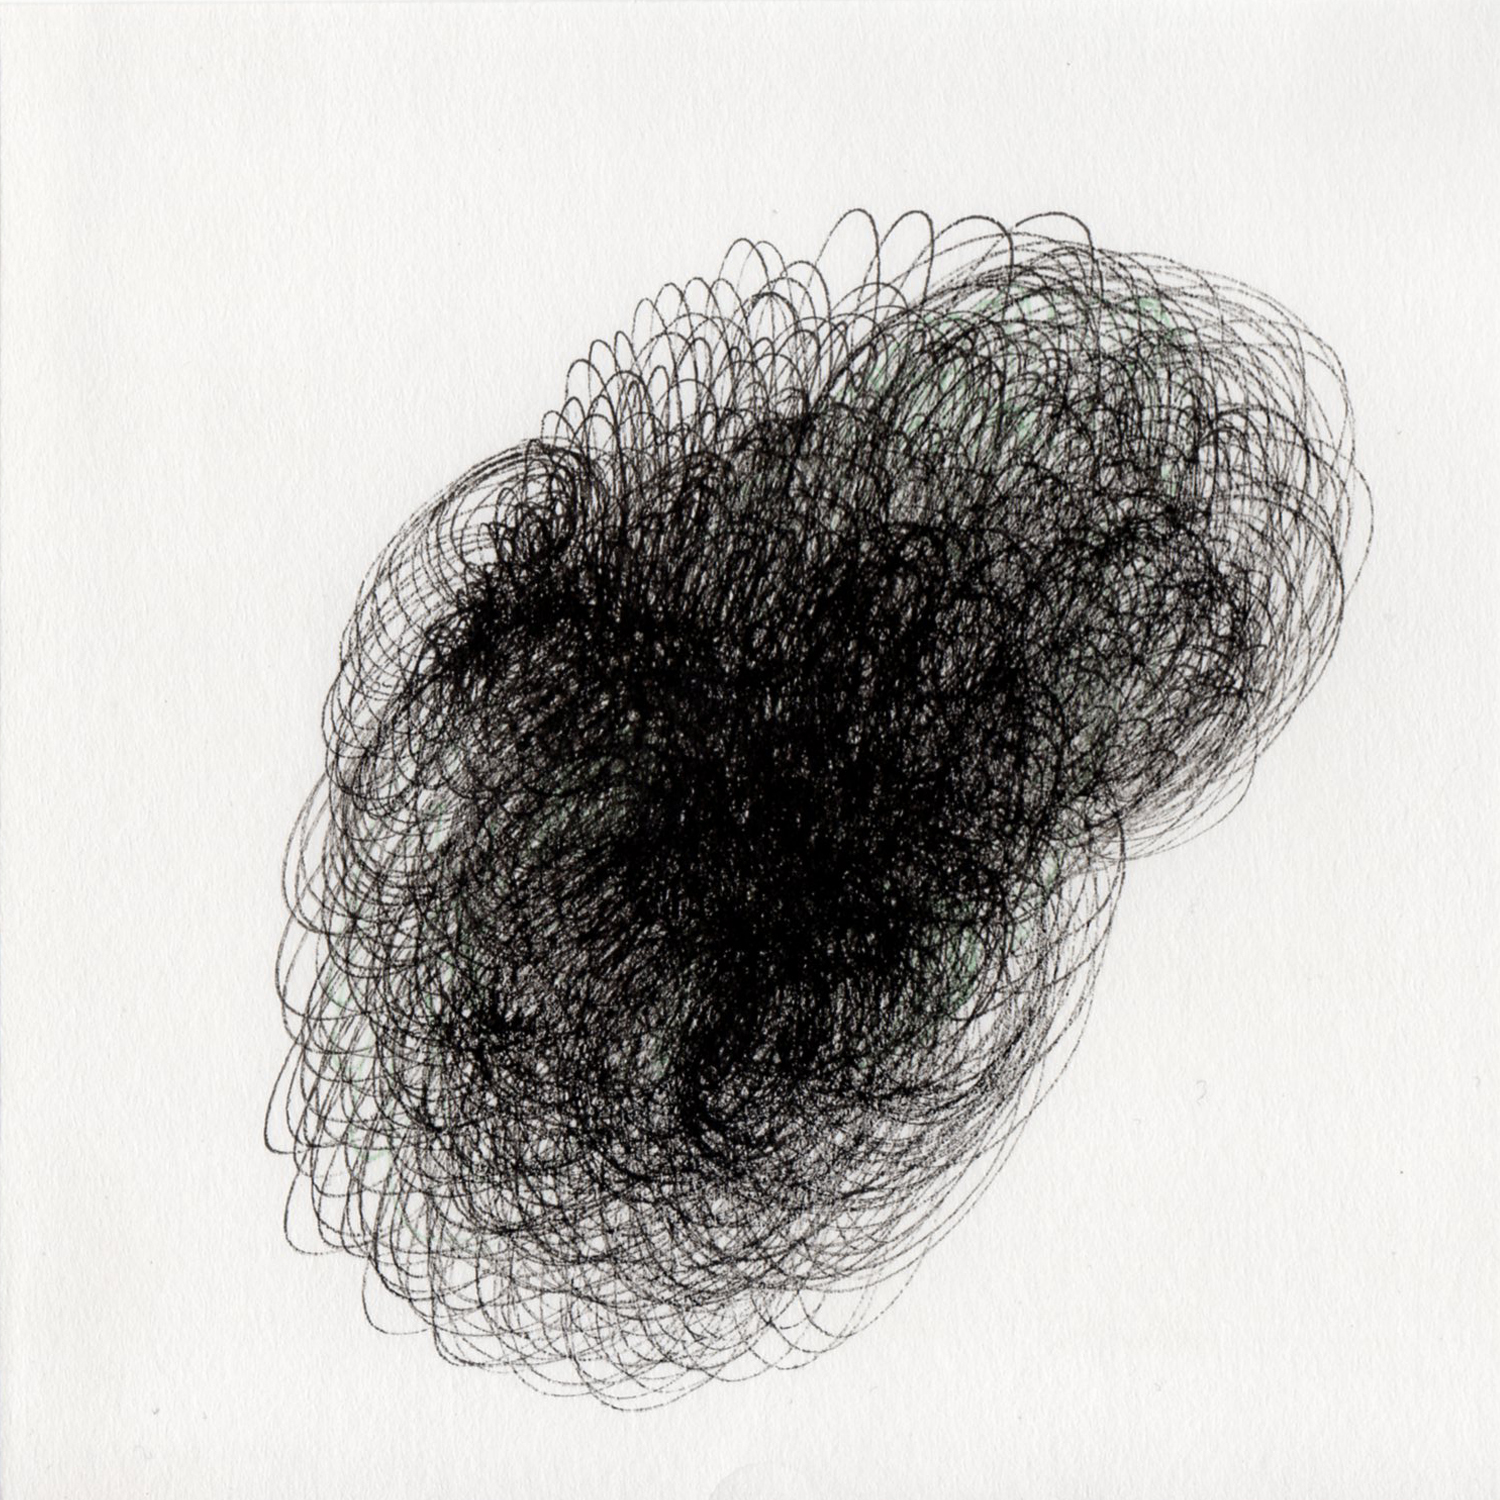   blob 11  pen on paper 5” x 5” 2014 